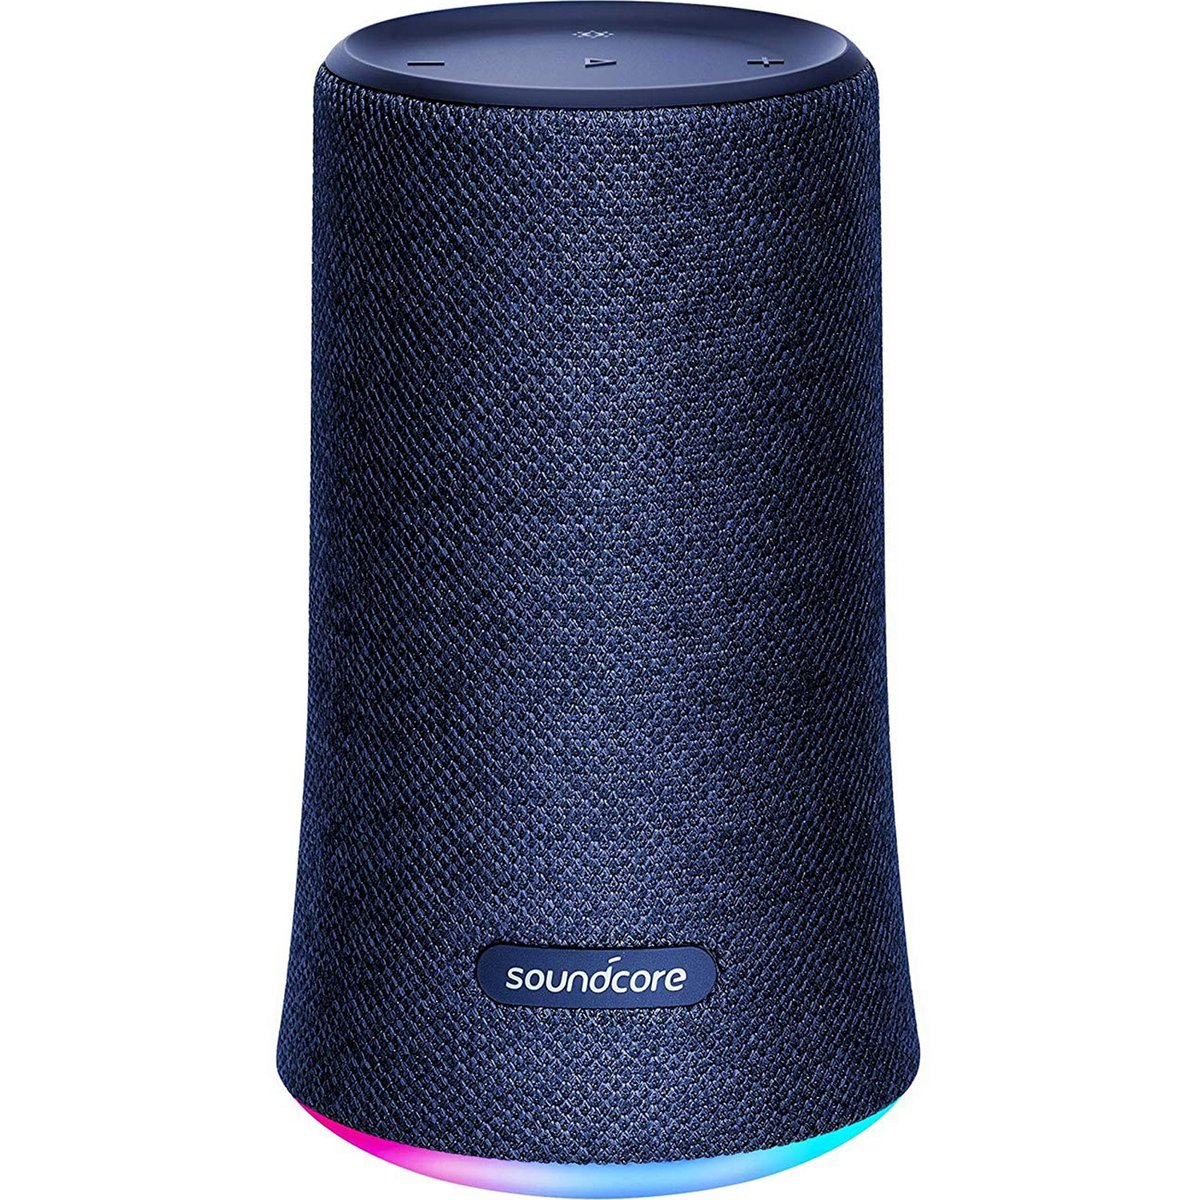 Anker SoundCore Flare Bluetooth Speake.A3161H31 Blue